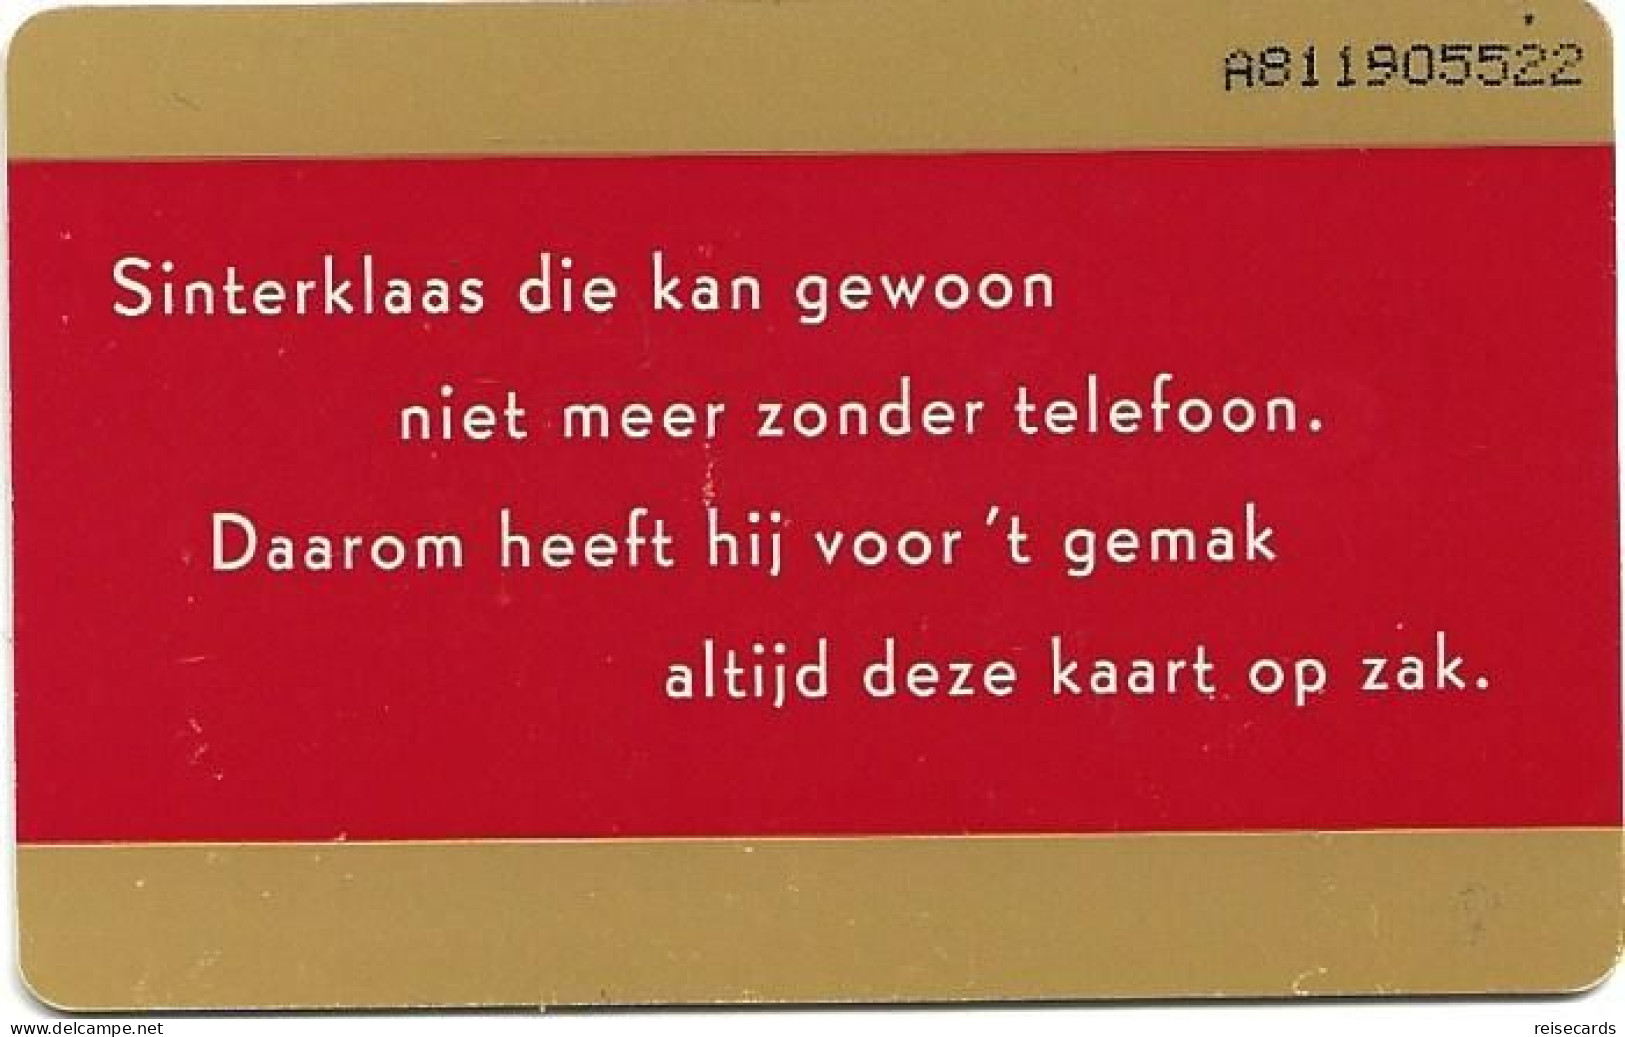 Netherlands: Ptt Telecom - 1996 Sinterklaas - öffentlich